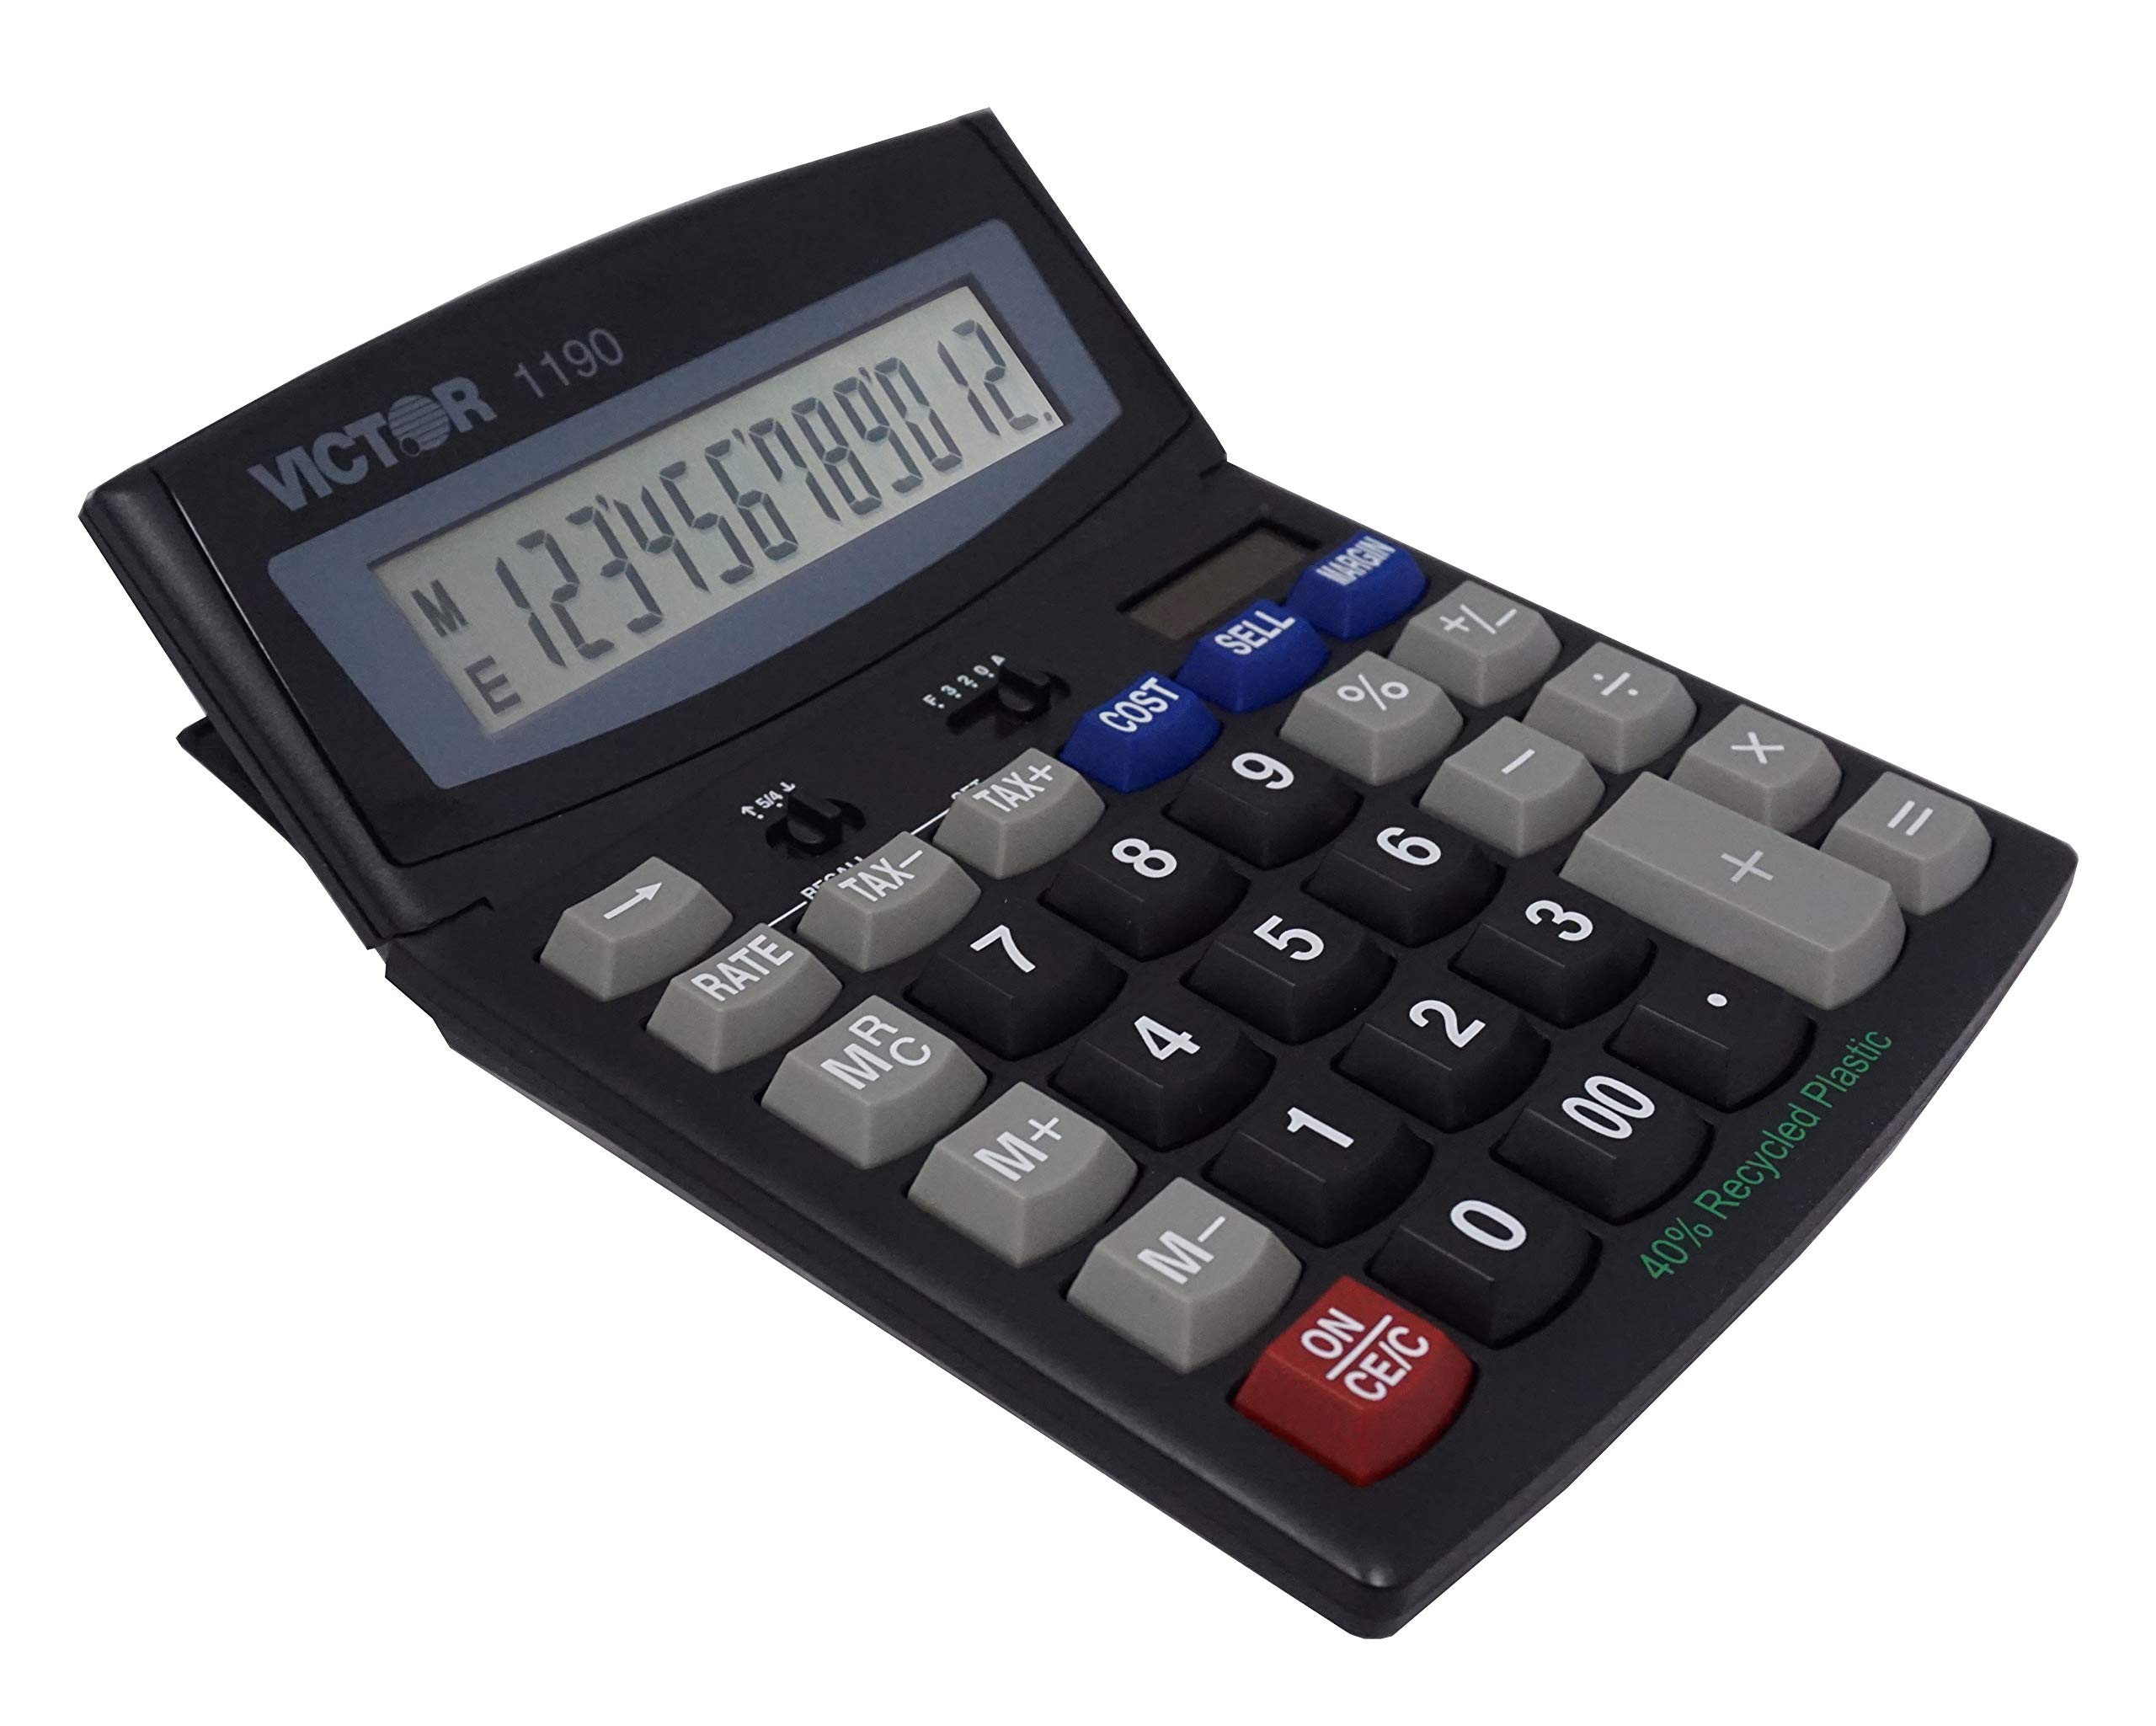 Victor 1190 Desktop Display Calculator, Black, 1